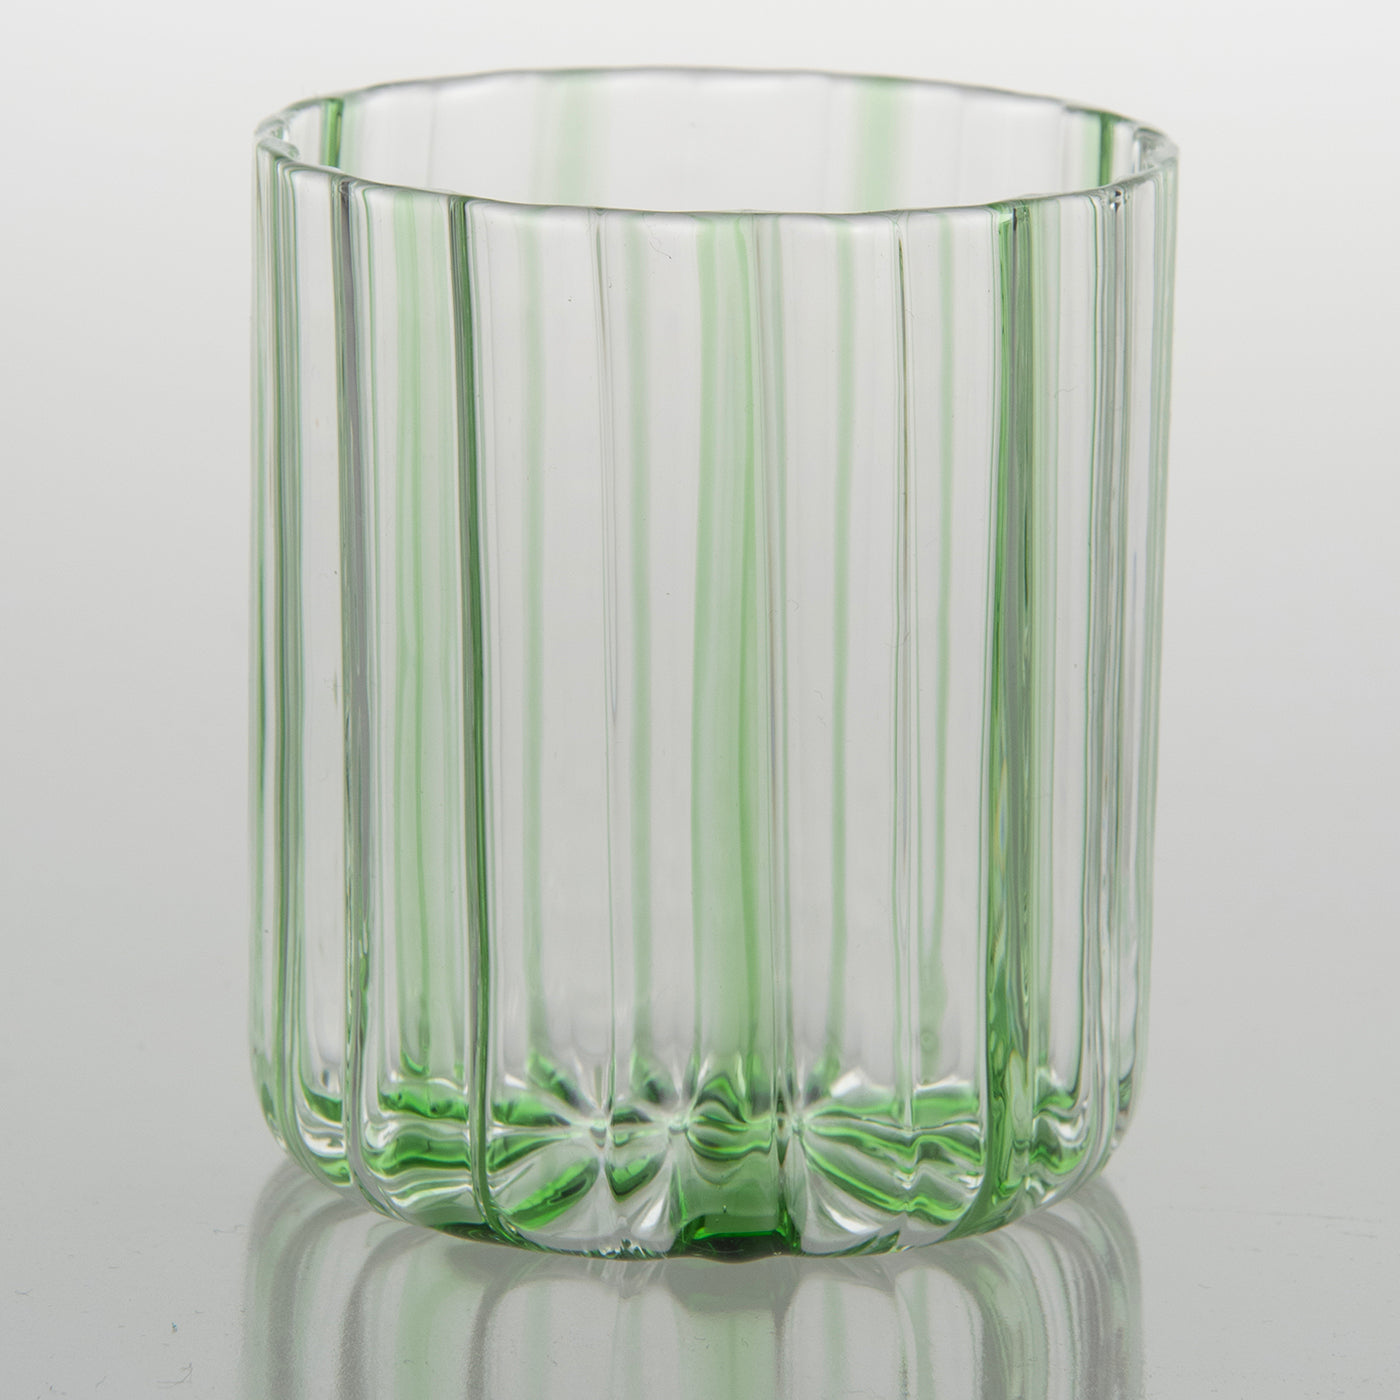 Green Stripes Glass - Alternative view 1